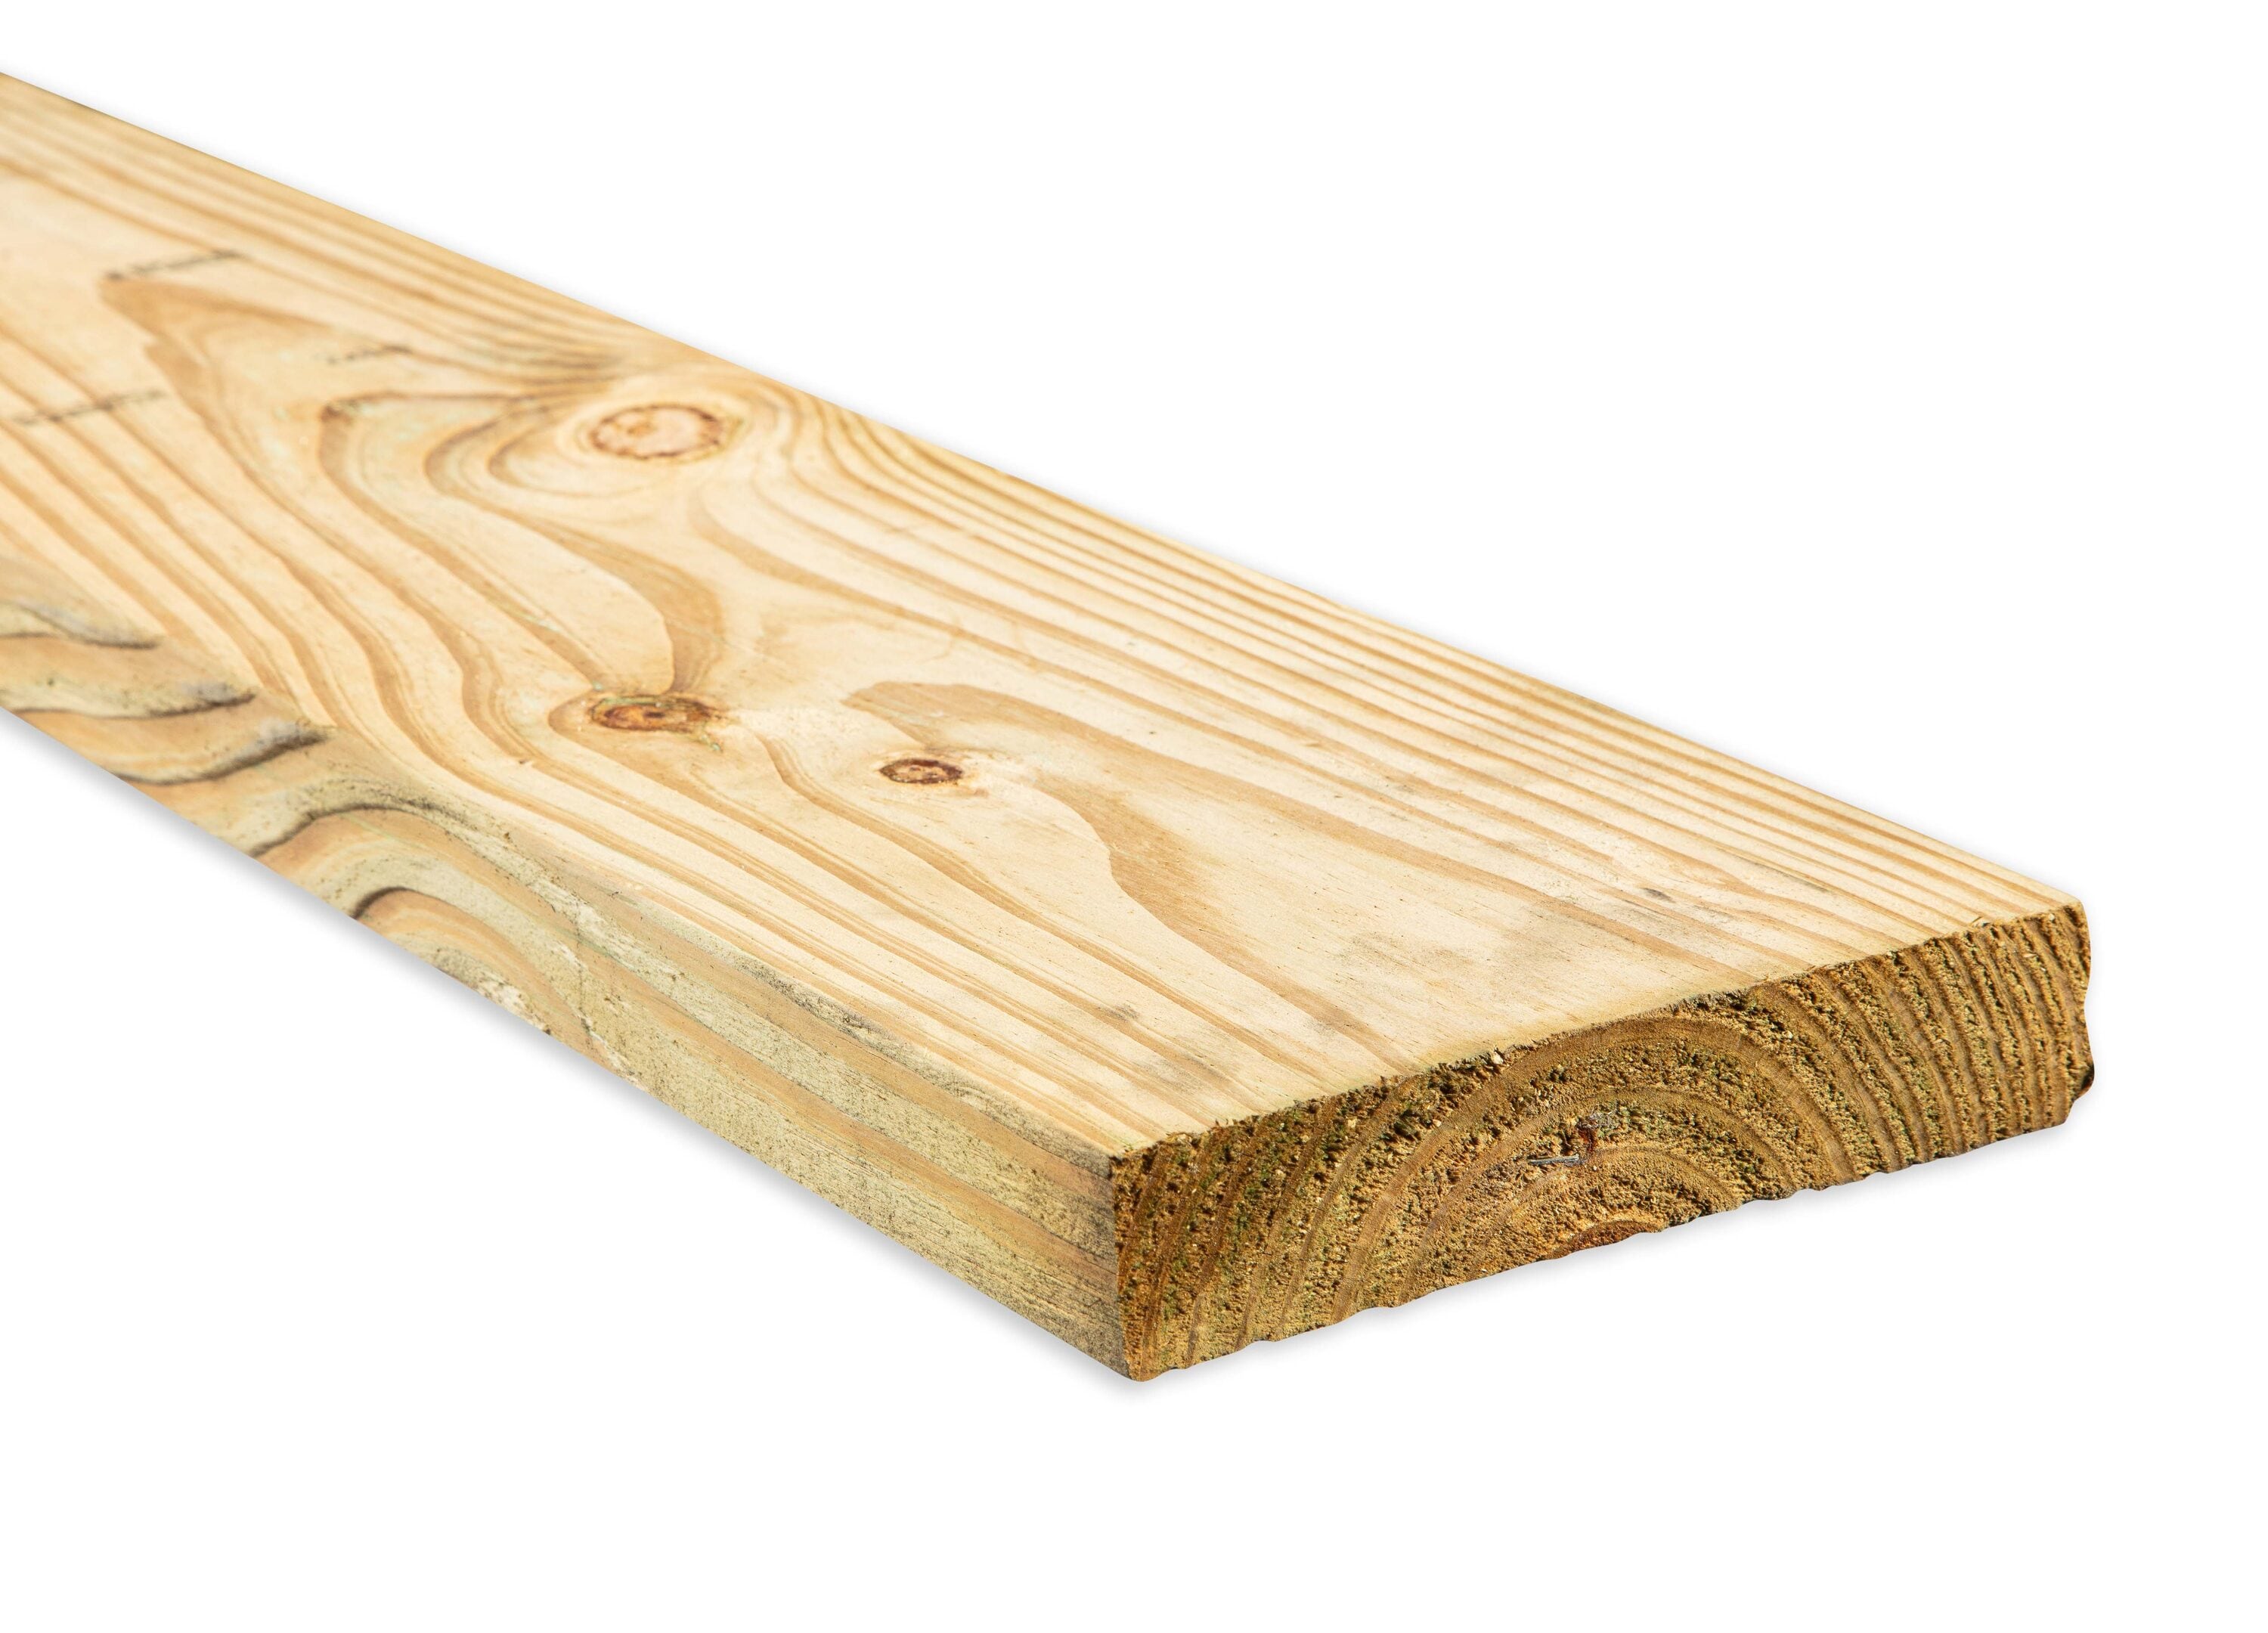 Buy Ceiling Mount Plywood 8 Rod Rack online at